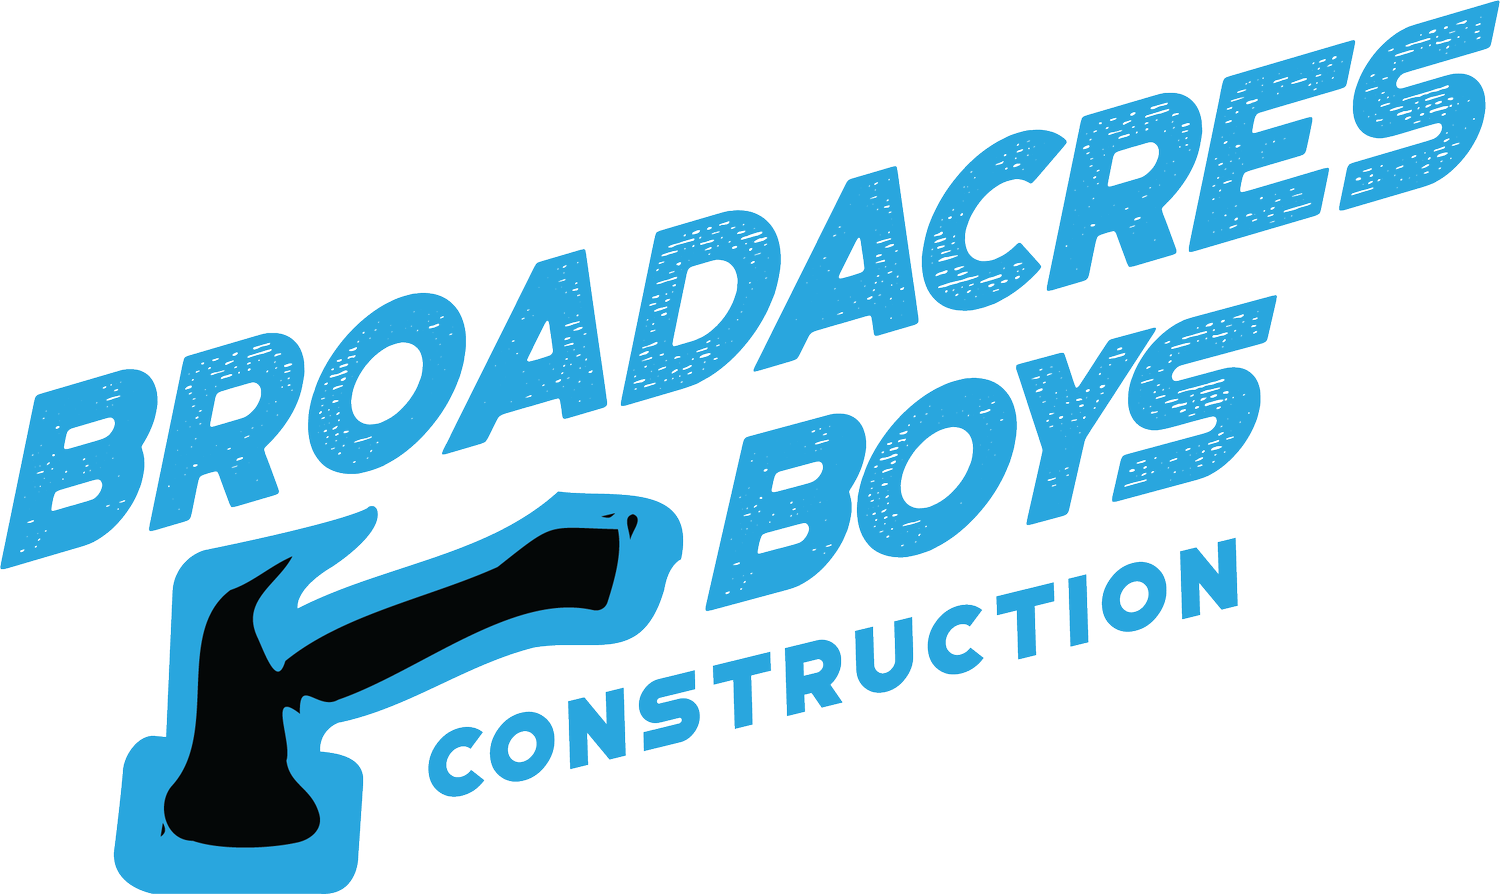 Broadacres Boys Construction